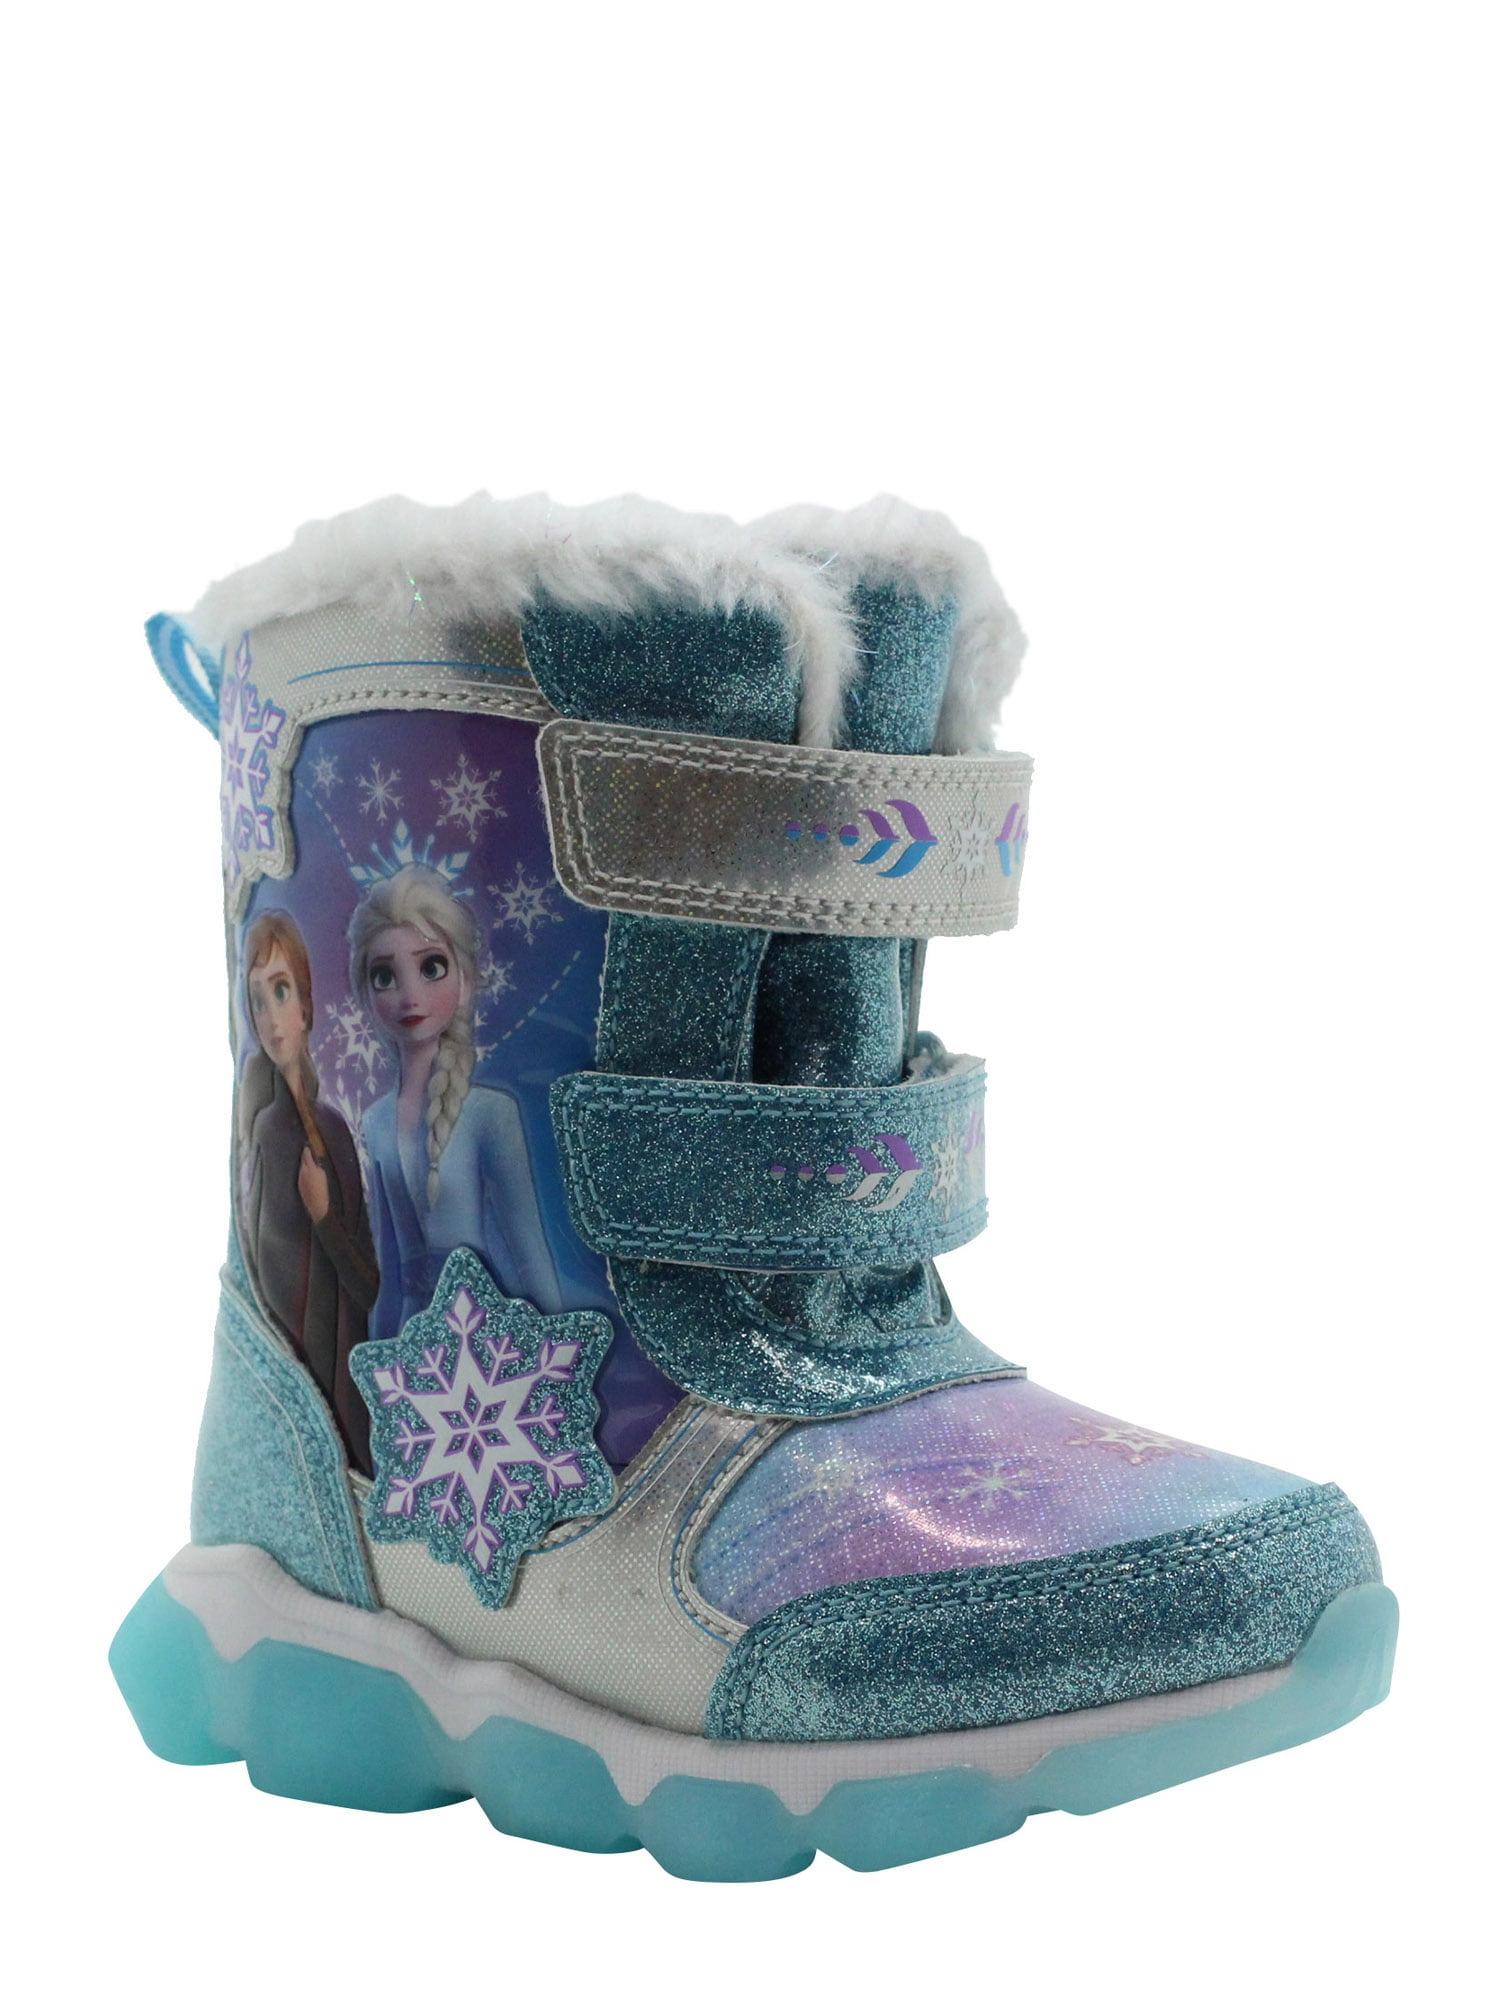 NEW Toddler Girls' Disney Frozen Winter Snow Boots Size 7,8,9,10,11,12 